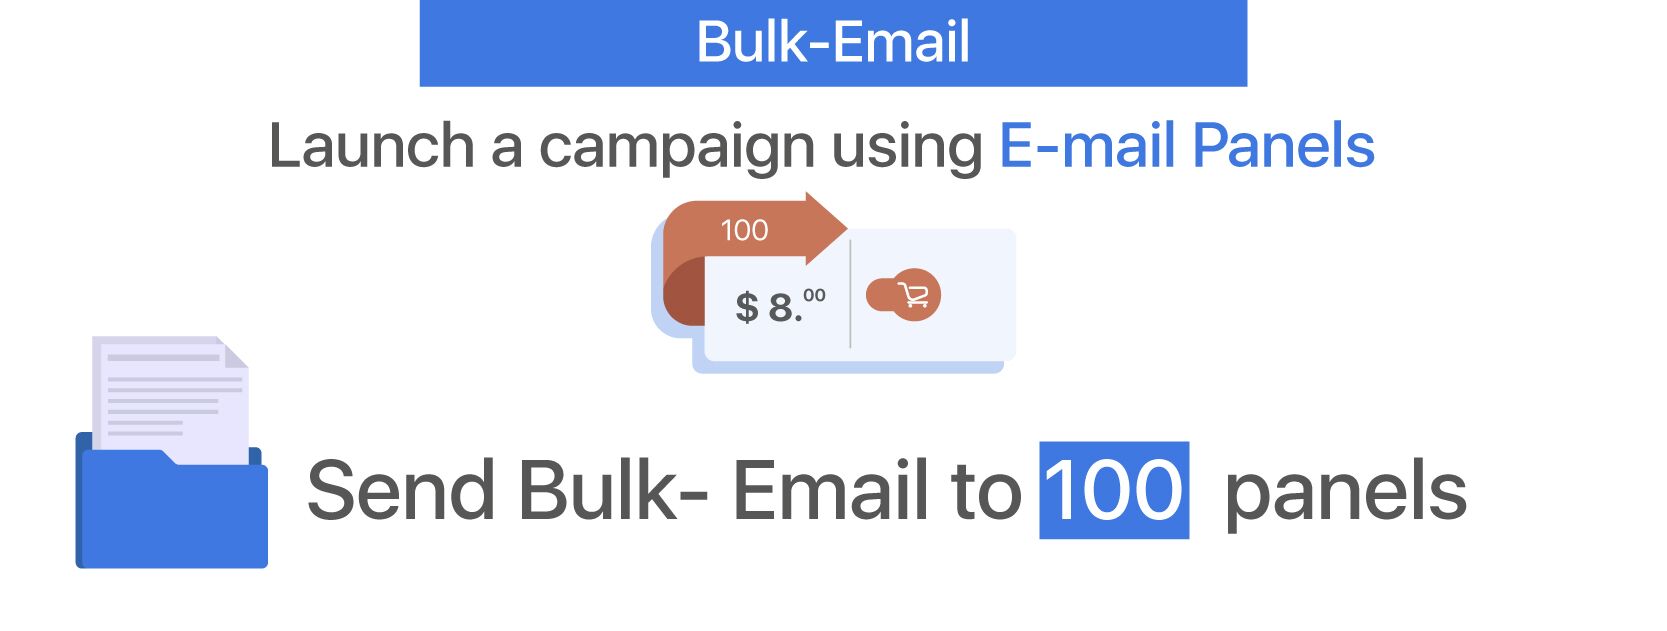 Bulk-Email - 100 Panels